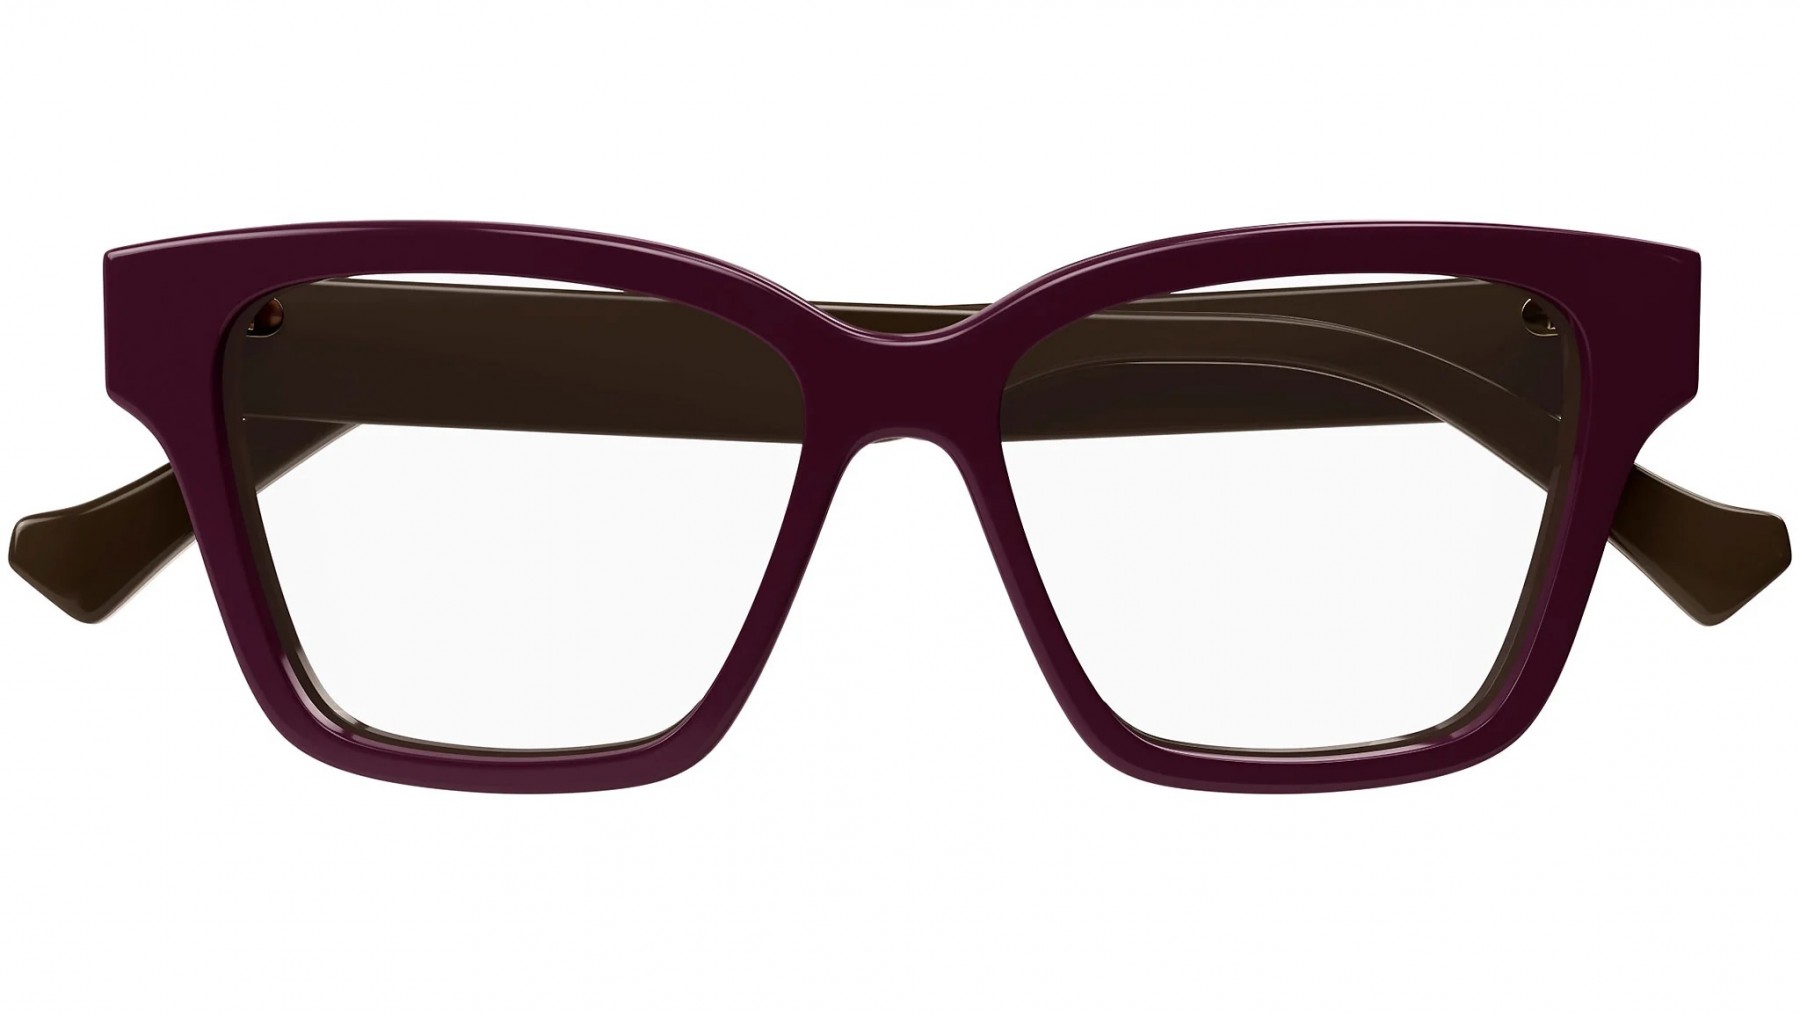 Gucci 1302O 005 - Oculos de Grau